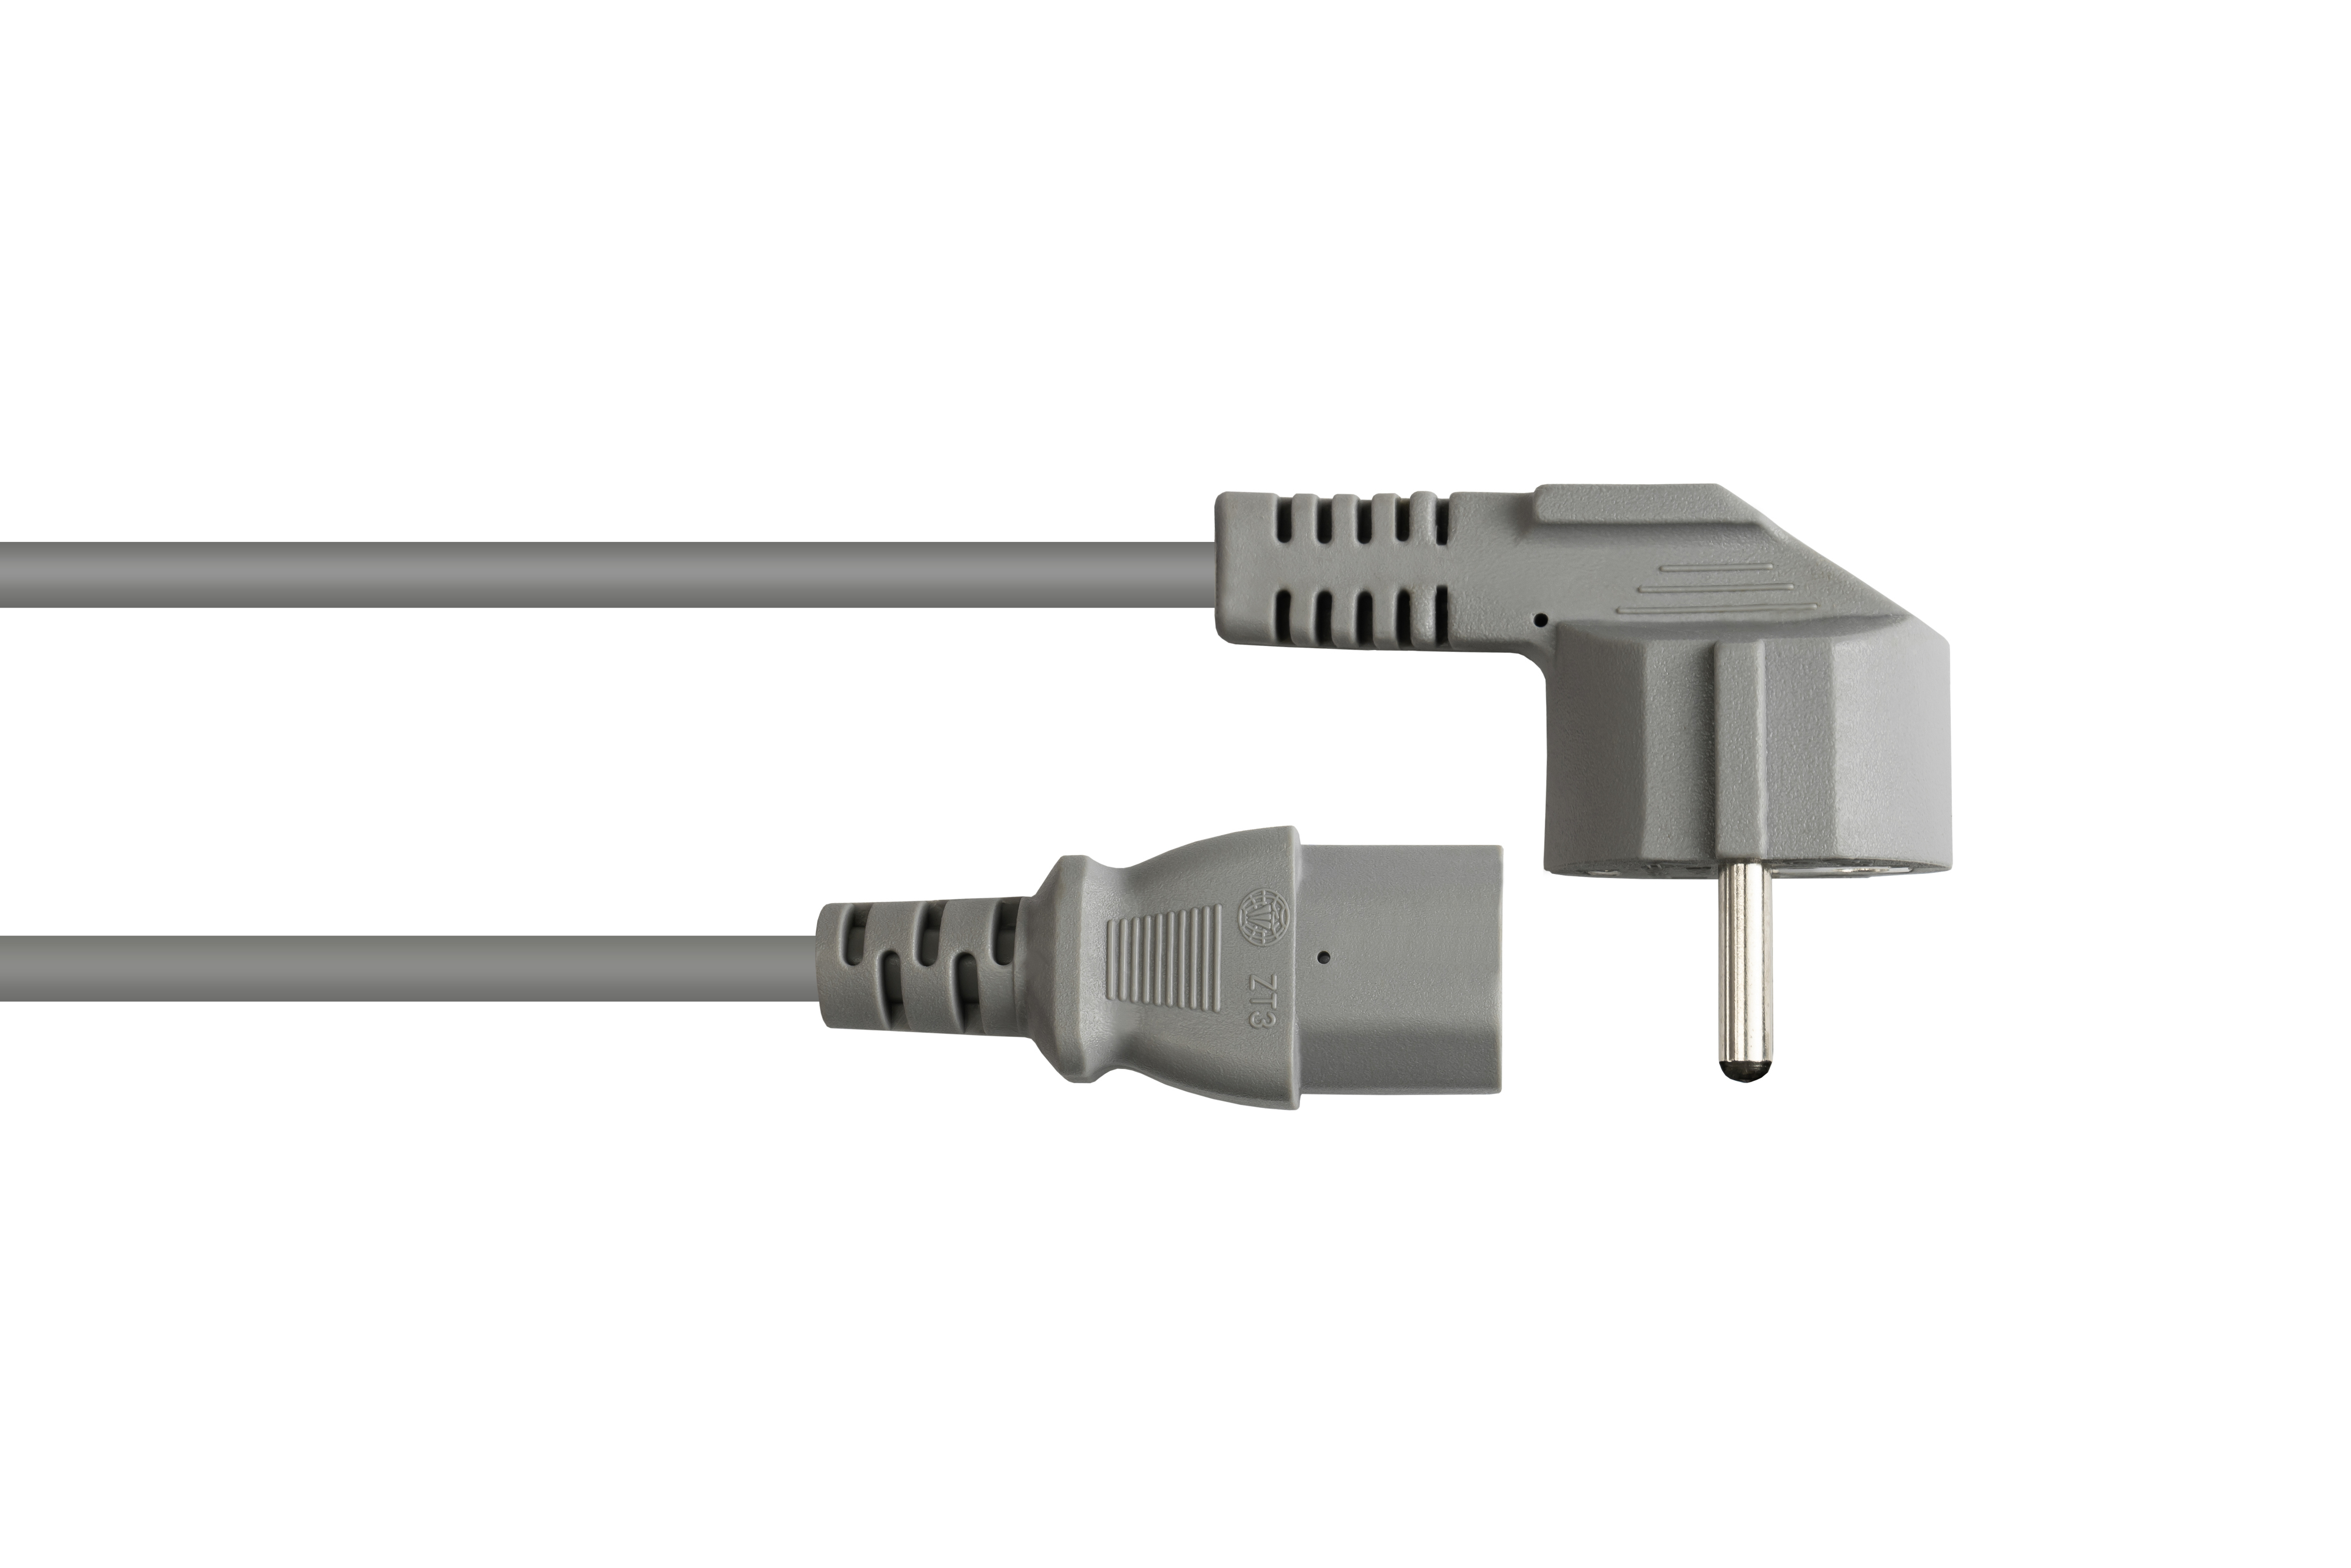 CONNECTIONS Schutzkontakt-Stecker E+F (gerade), Typ an C13 gewinkelt) Stromkabel, 7/7, GOOD mm² grau, grau 0,75 (CEE